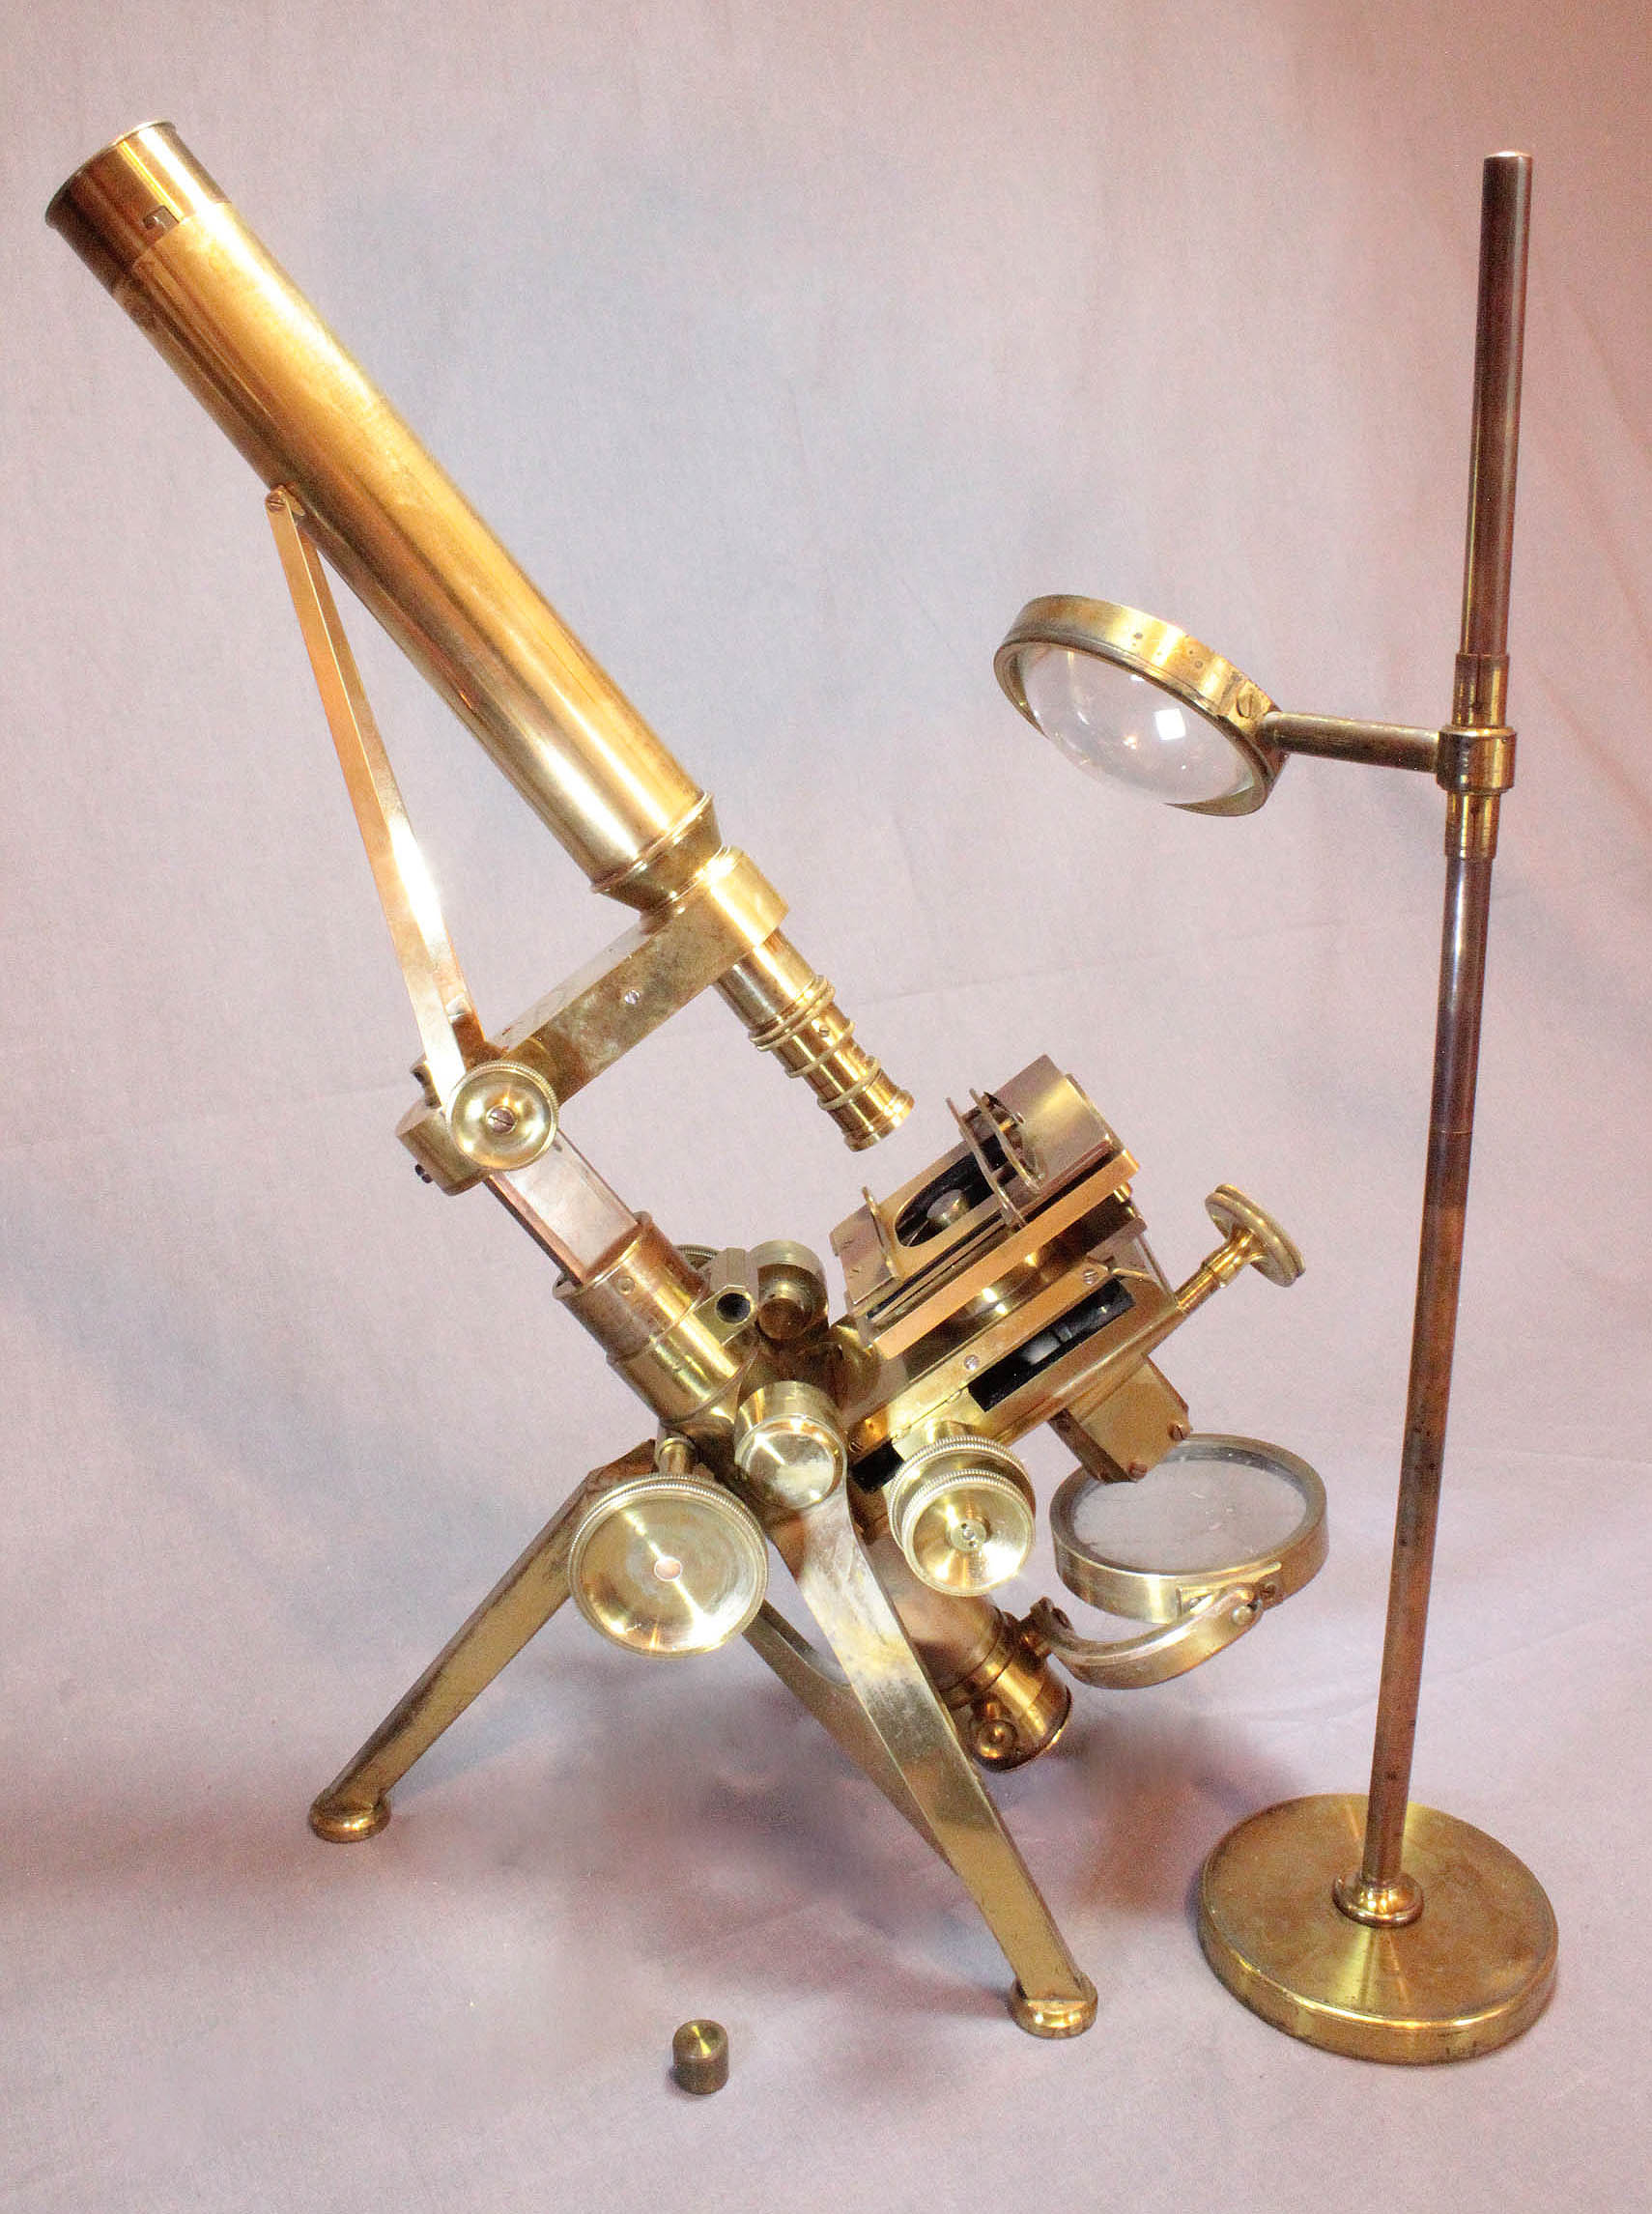 Powell & Lealand Original Model for the No. 1 Microscope